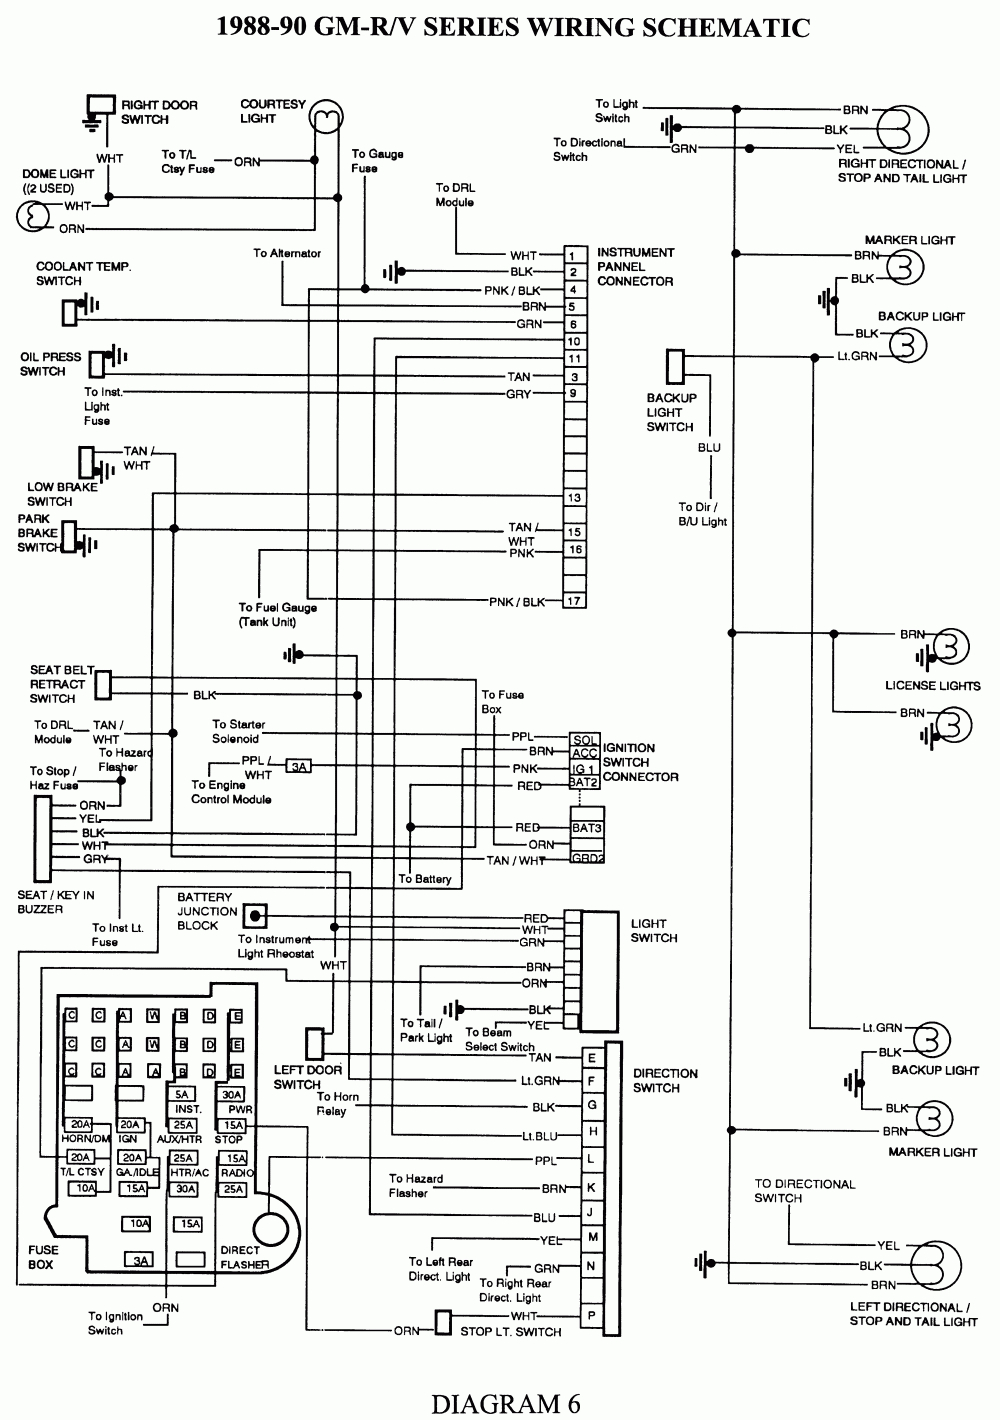 Repair Guides | Wiring Diagrams | Wiring Diagrams | Autozone - Wiring Diagram For